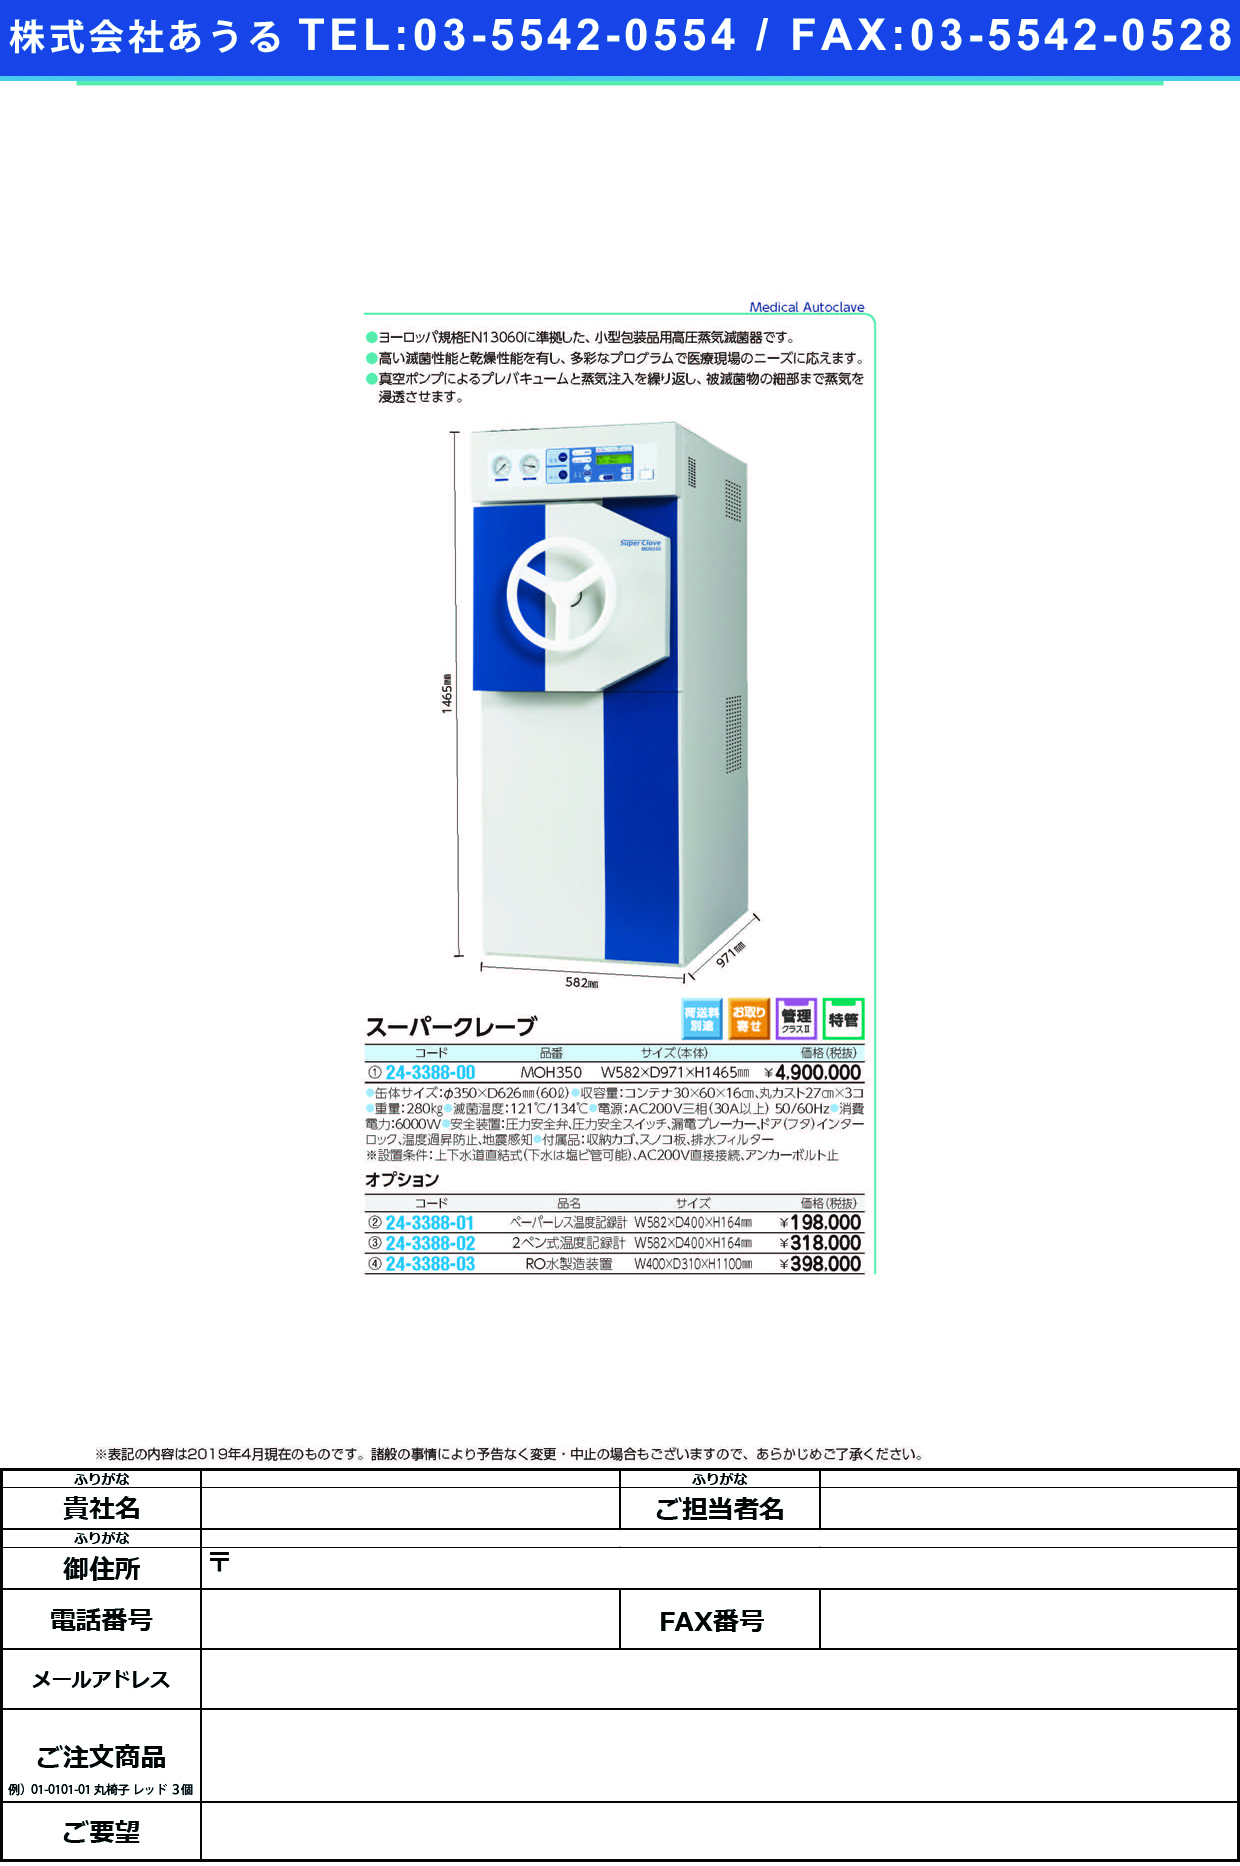 (24-3388-03)ＲＯ水製造装置 MOH350ﾖｳ ROｽｲｾｲｿﾞｳｿｳﾁ(オカモト)【1台単位】【2019年カタログ商品】